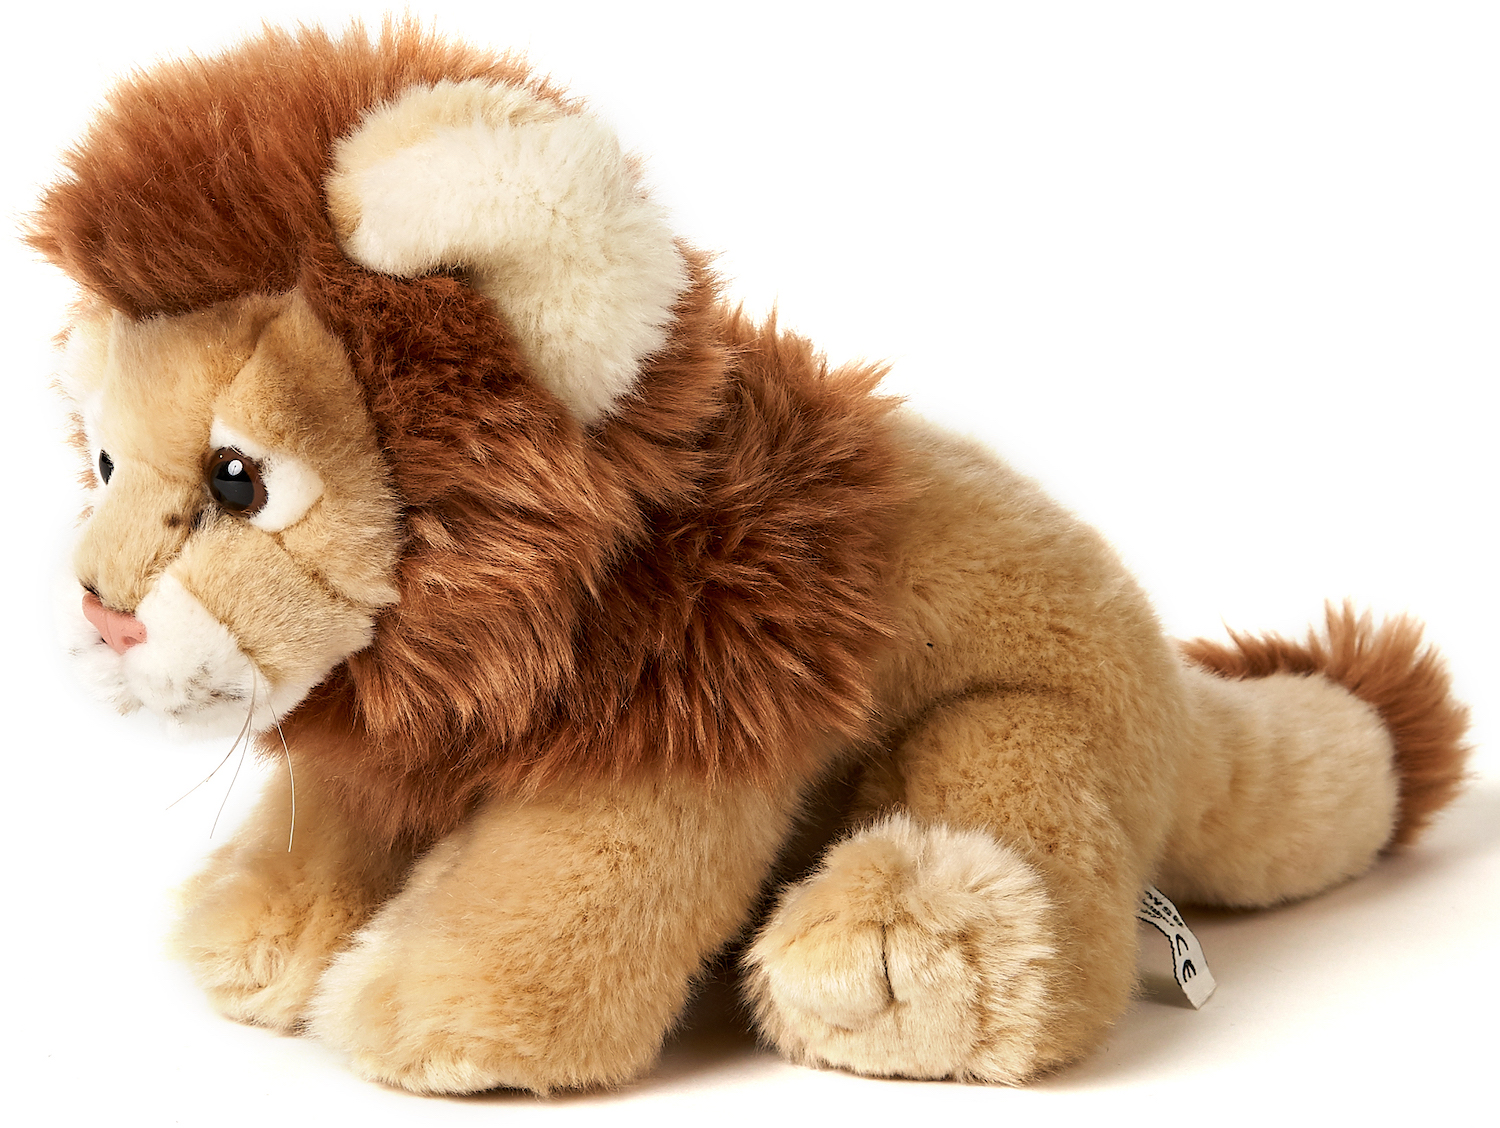  Lion, sitting - 19 cm (height)